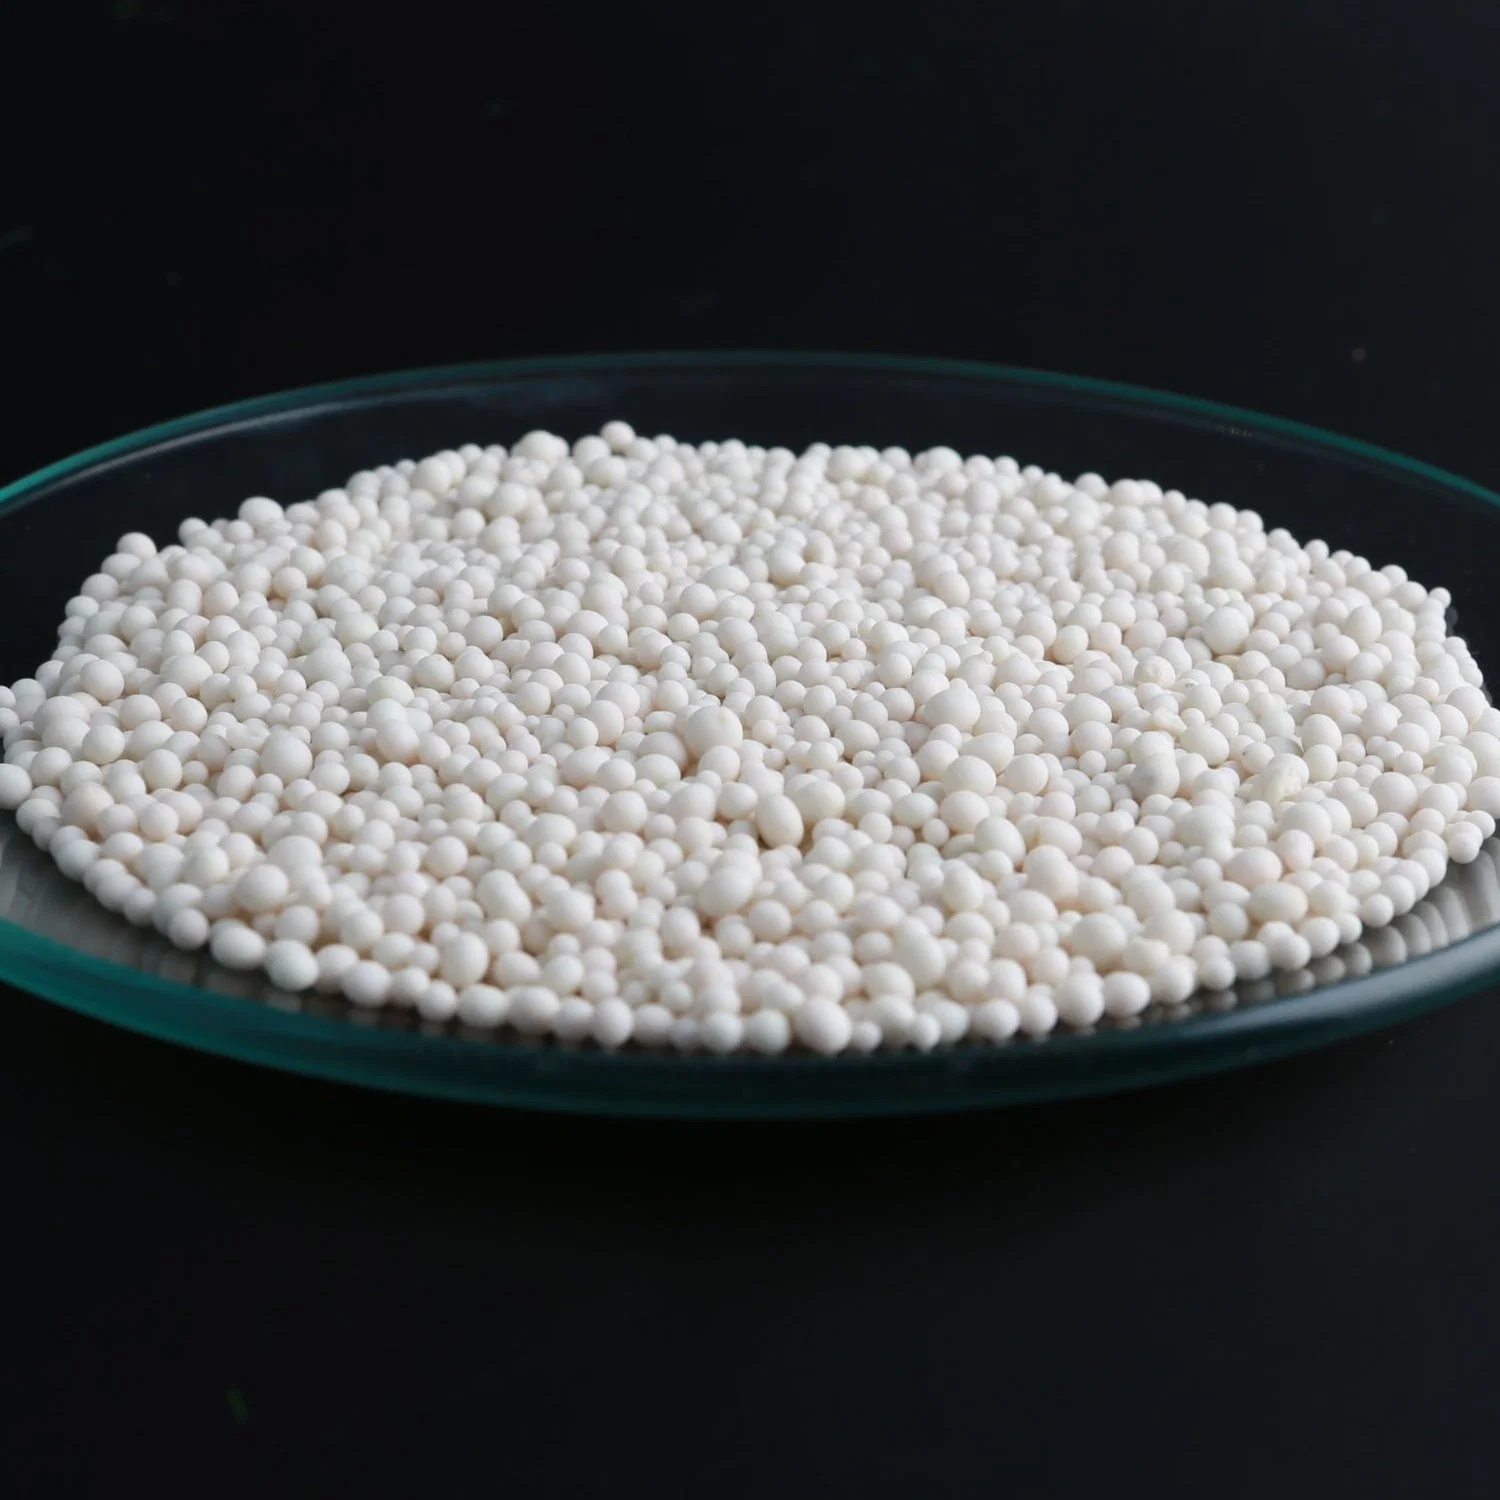 NPK azoto fósforo potássio água solúvel fertilizante preço